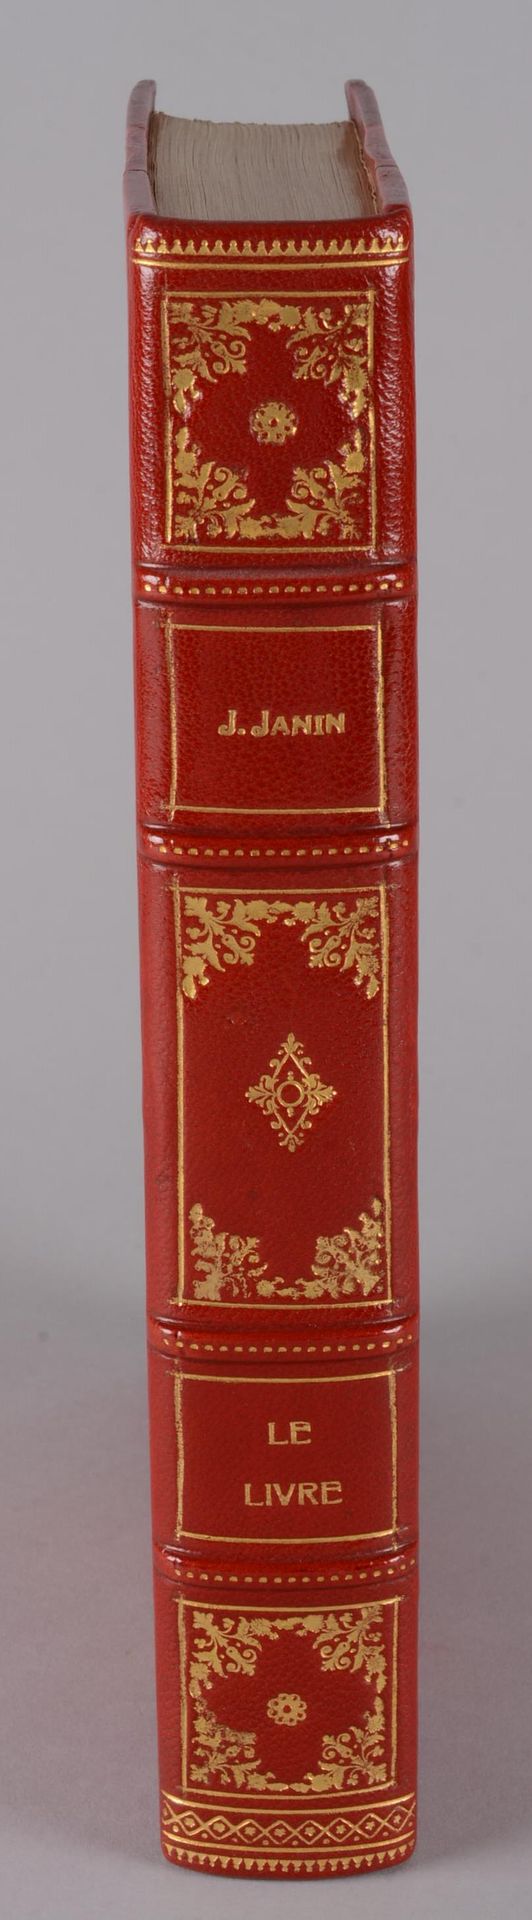 JANIN Jules JANIN JULES



这本书



 巴黎, Plon, 1870



 大8开本。半红摩洛哥，有边角。书脊上有5根饰纹，饰有&hellip;